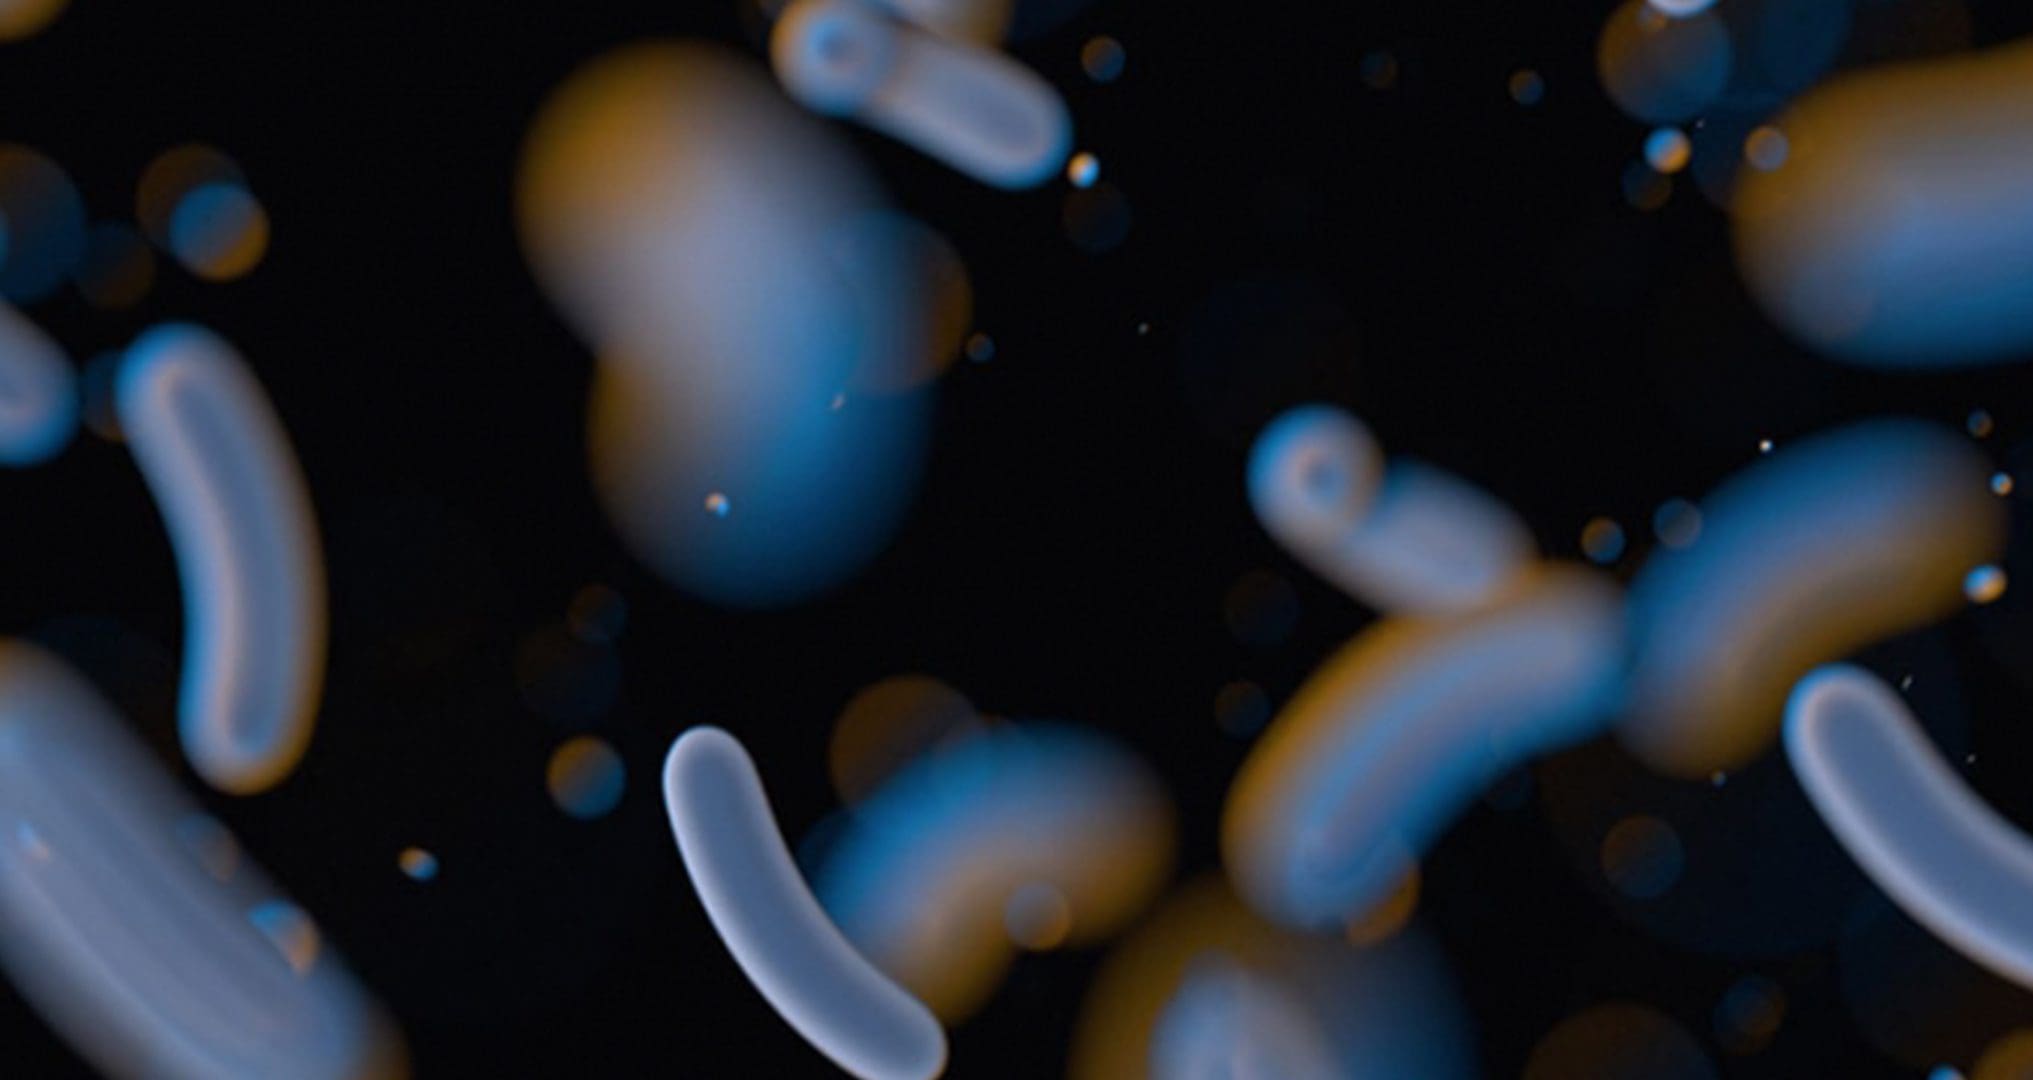 bacteria in water zoomed in